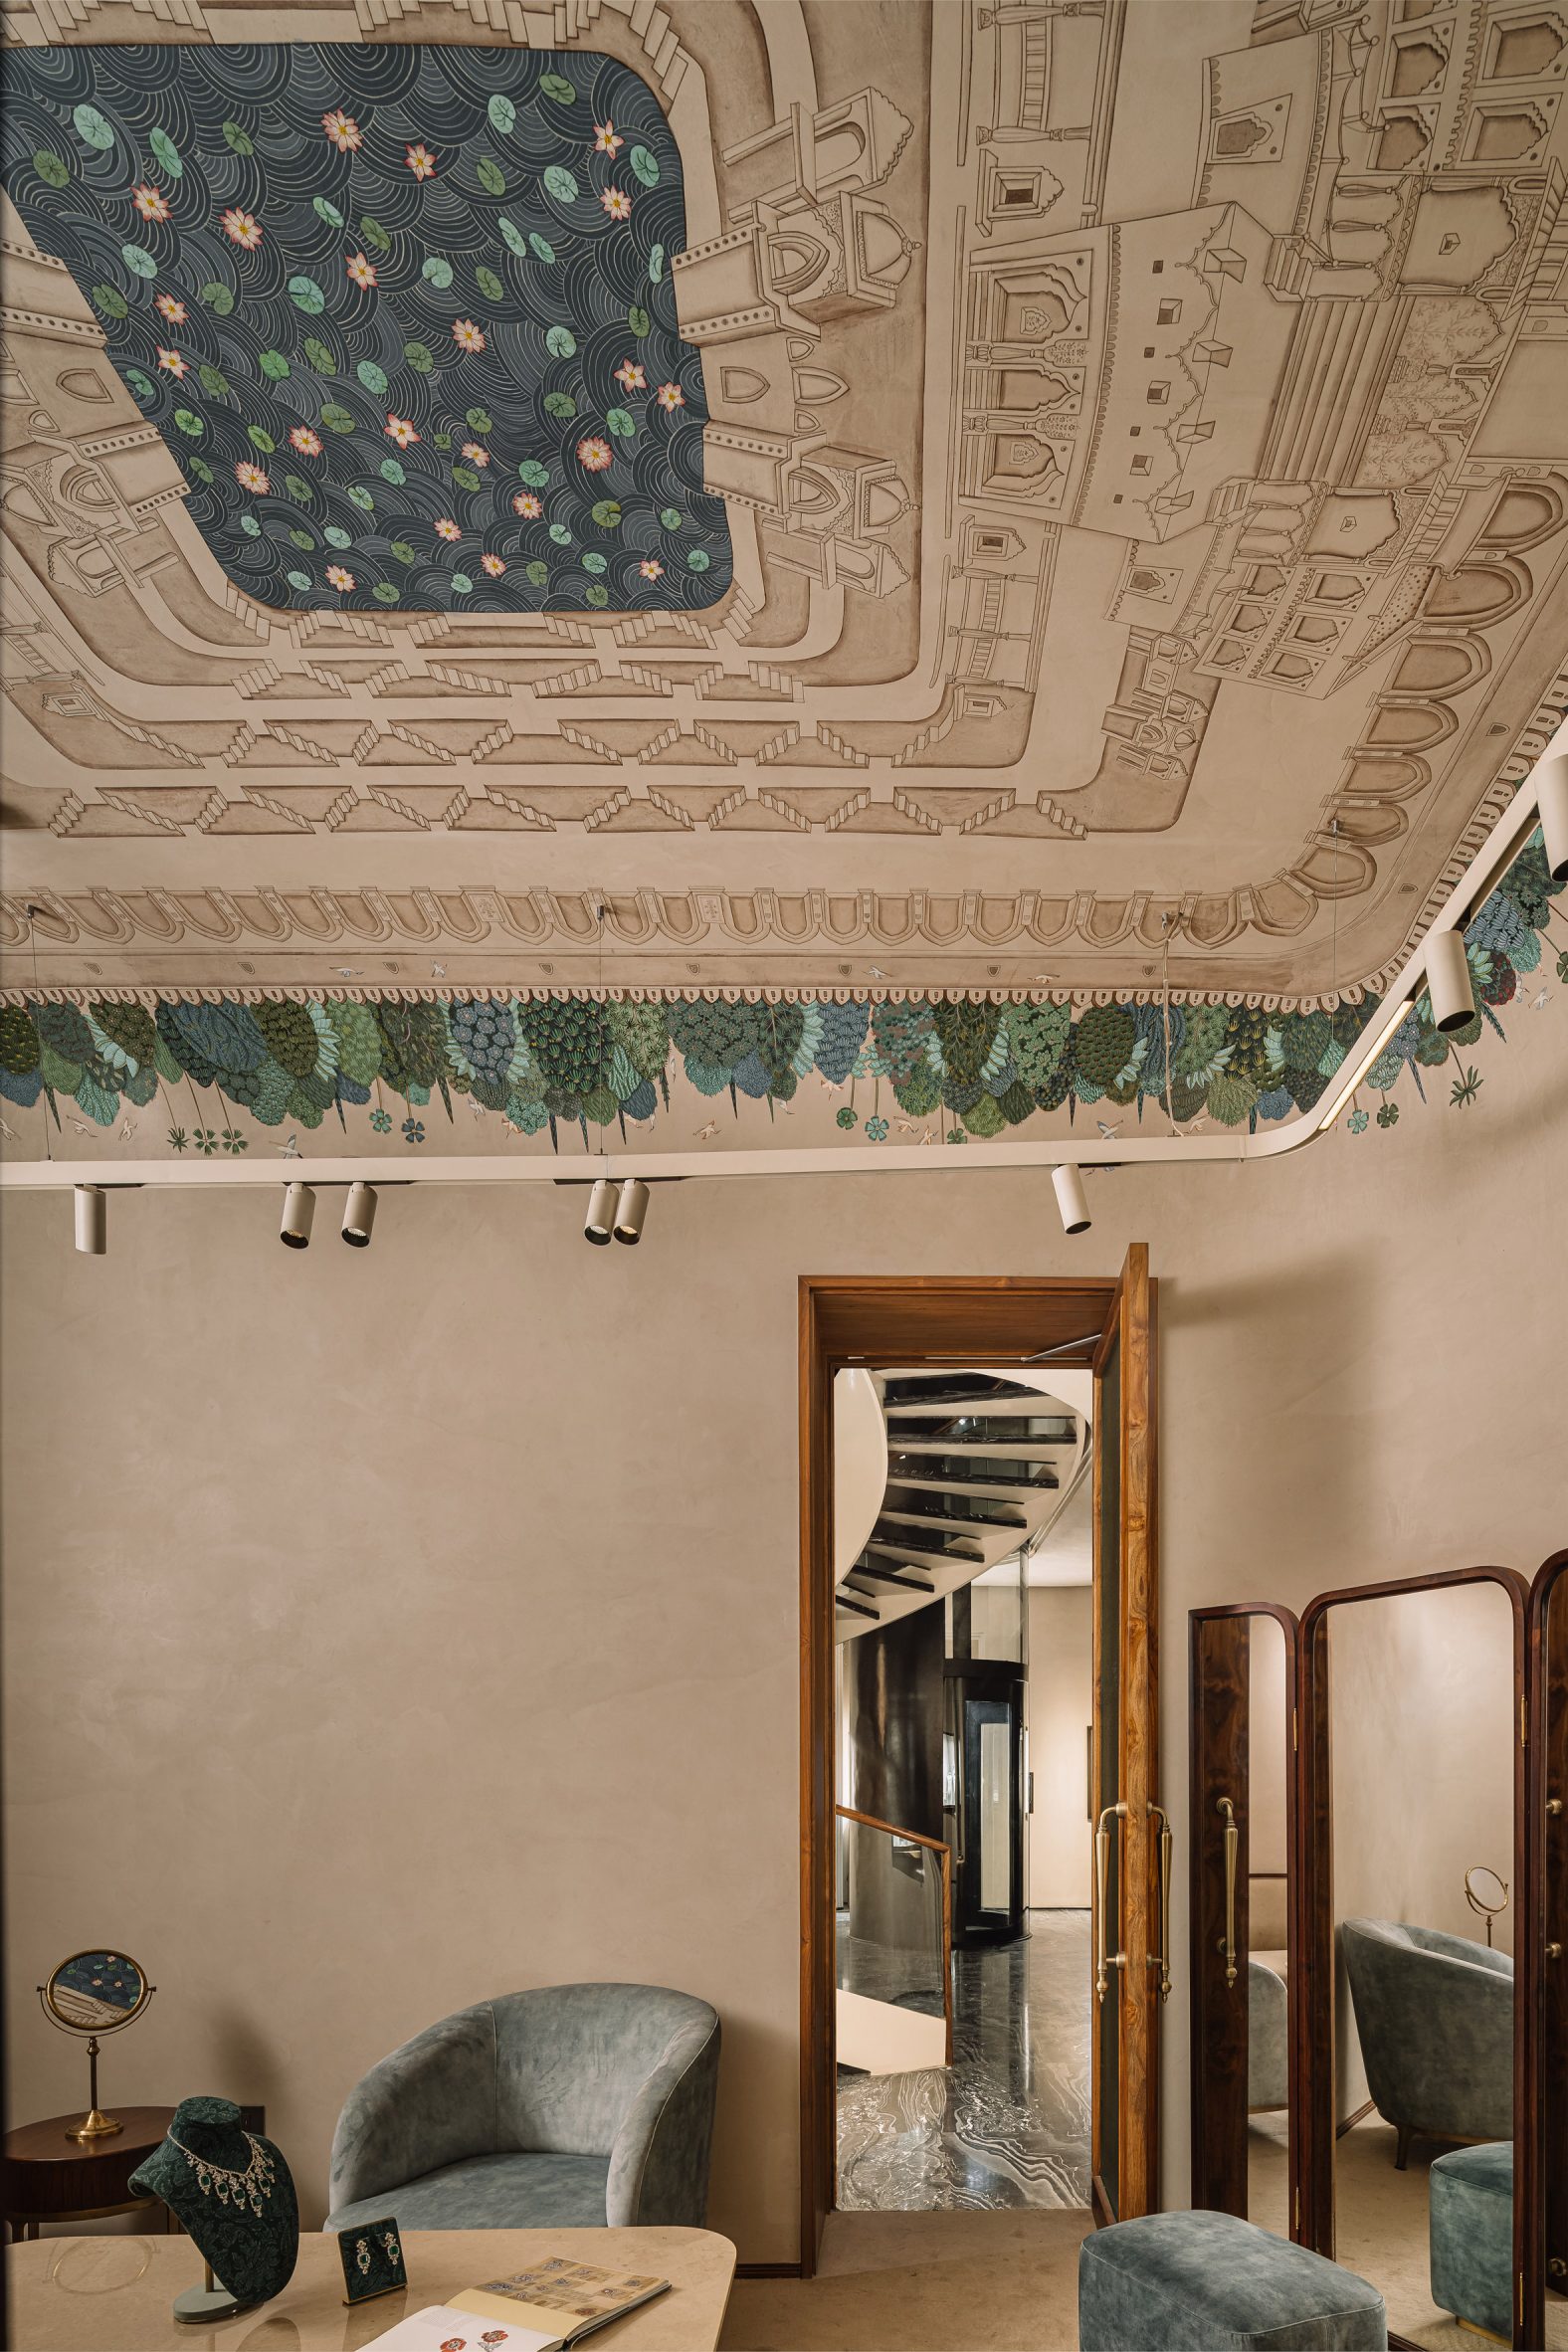 Interiors of Museum of Meenakari Heritage and Flagship Store for Sunita Shekhawat by Studio Lotus